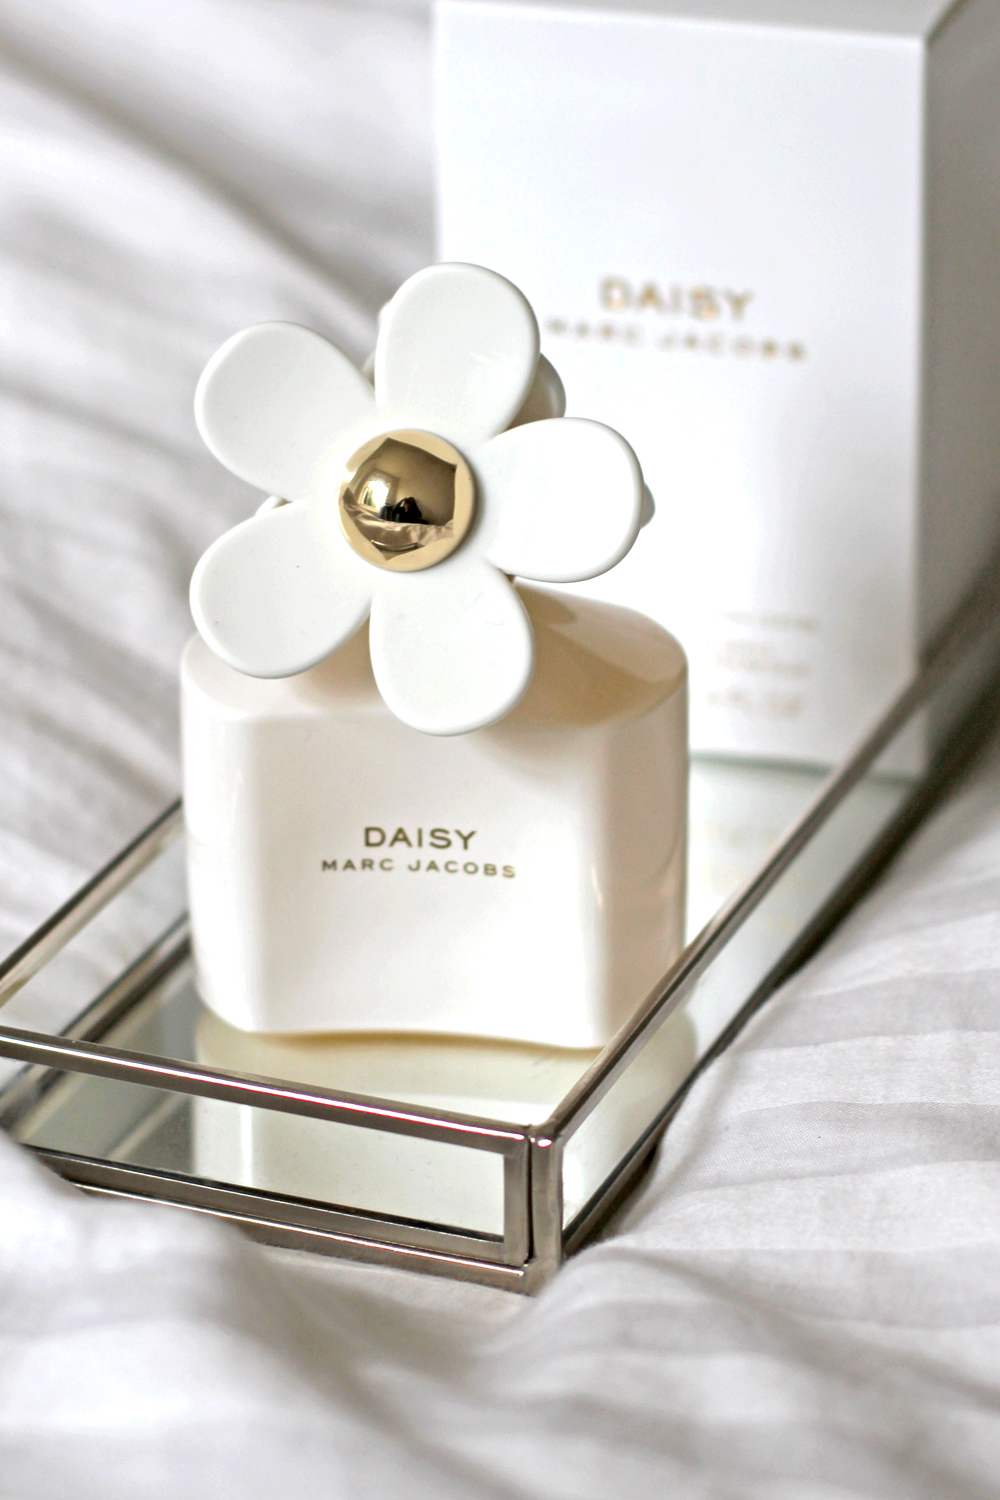 Marc Jacobs Daisy White fragrance - UK beauty blog